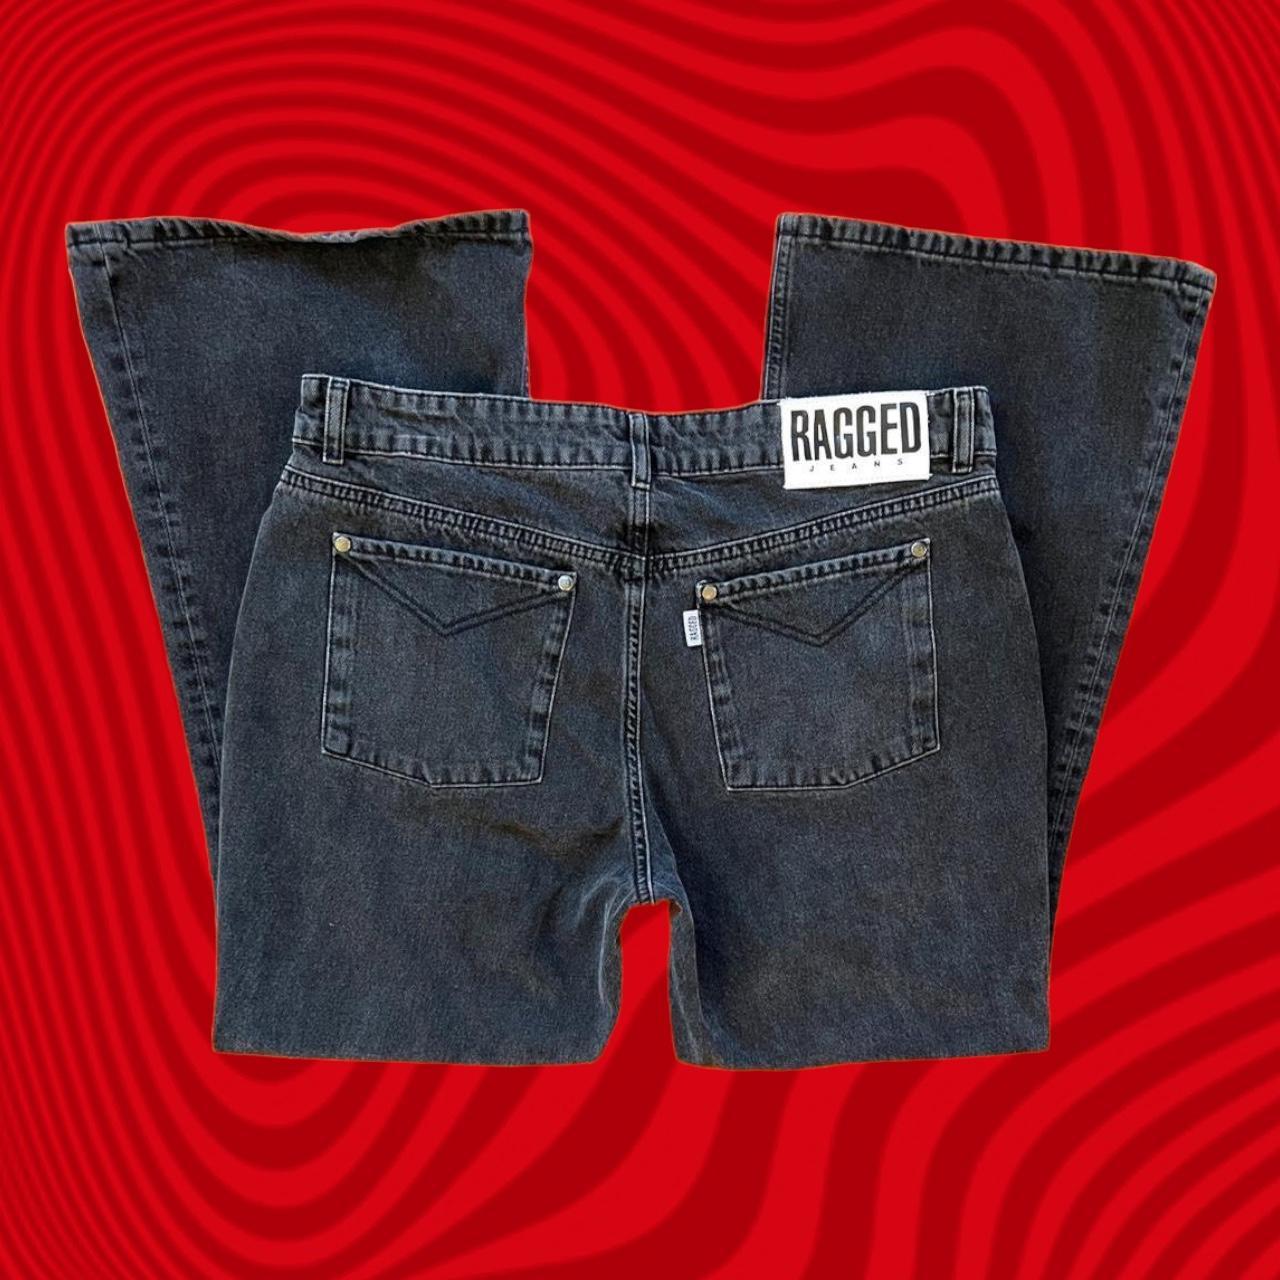 Product Image 3 - ✿Mid-rise wide-leg black denim jeans.
✿The